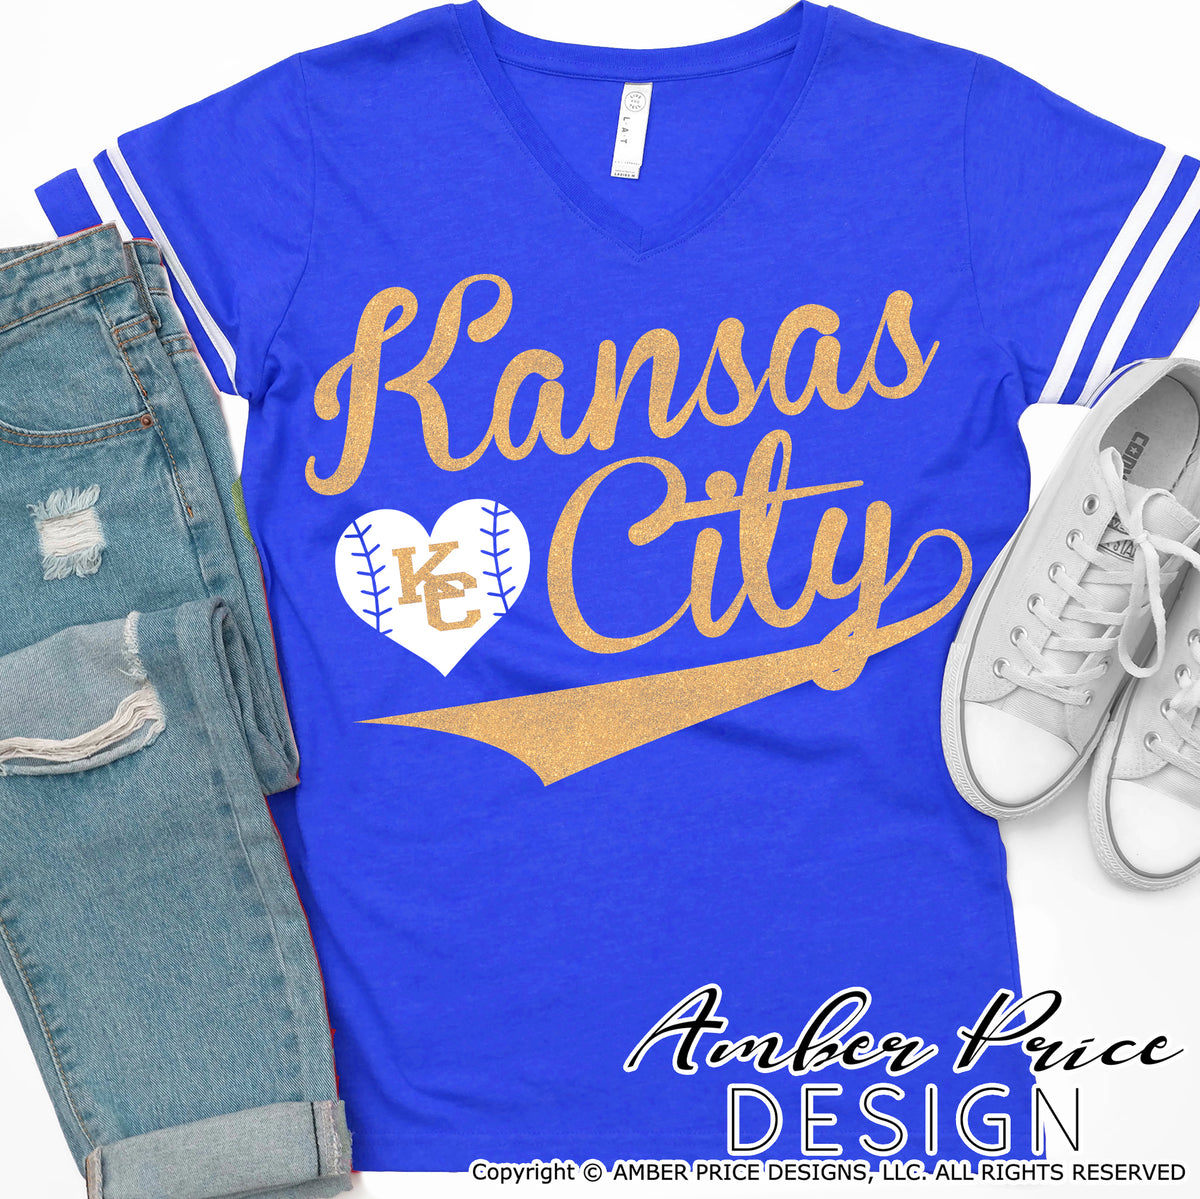 Kansas City Royals logo Digital File (SVG cutting file + pdf+png+dxf)